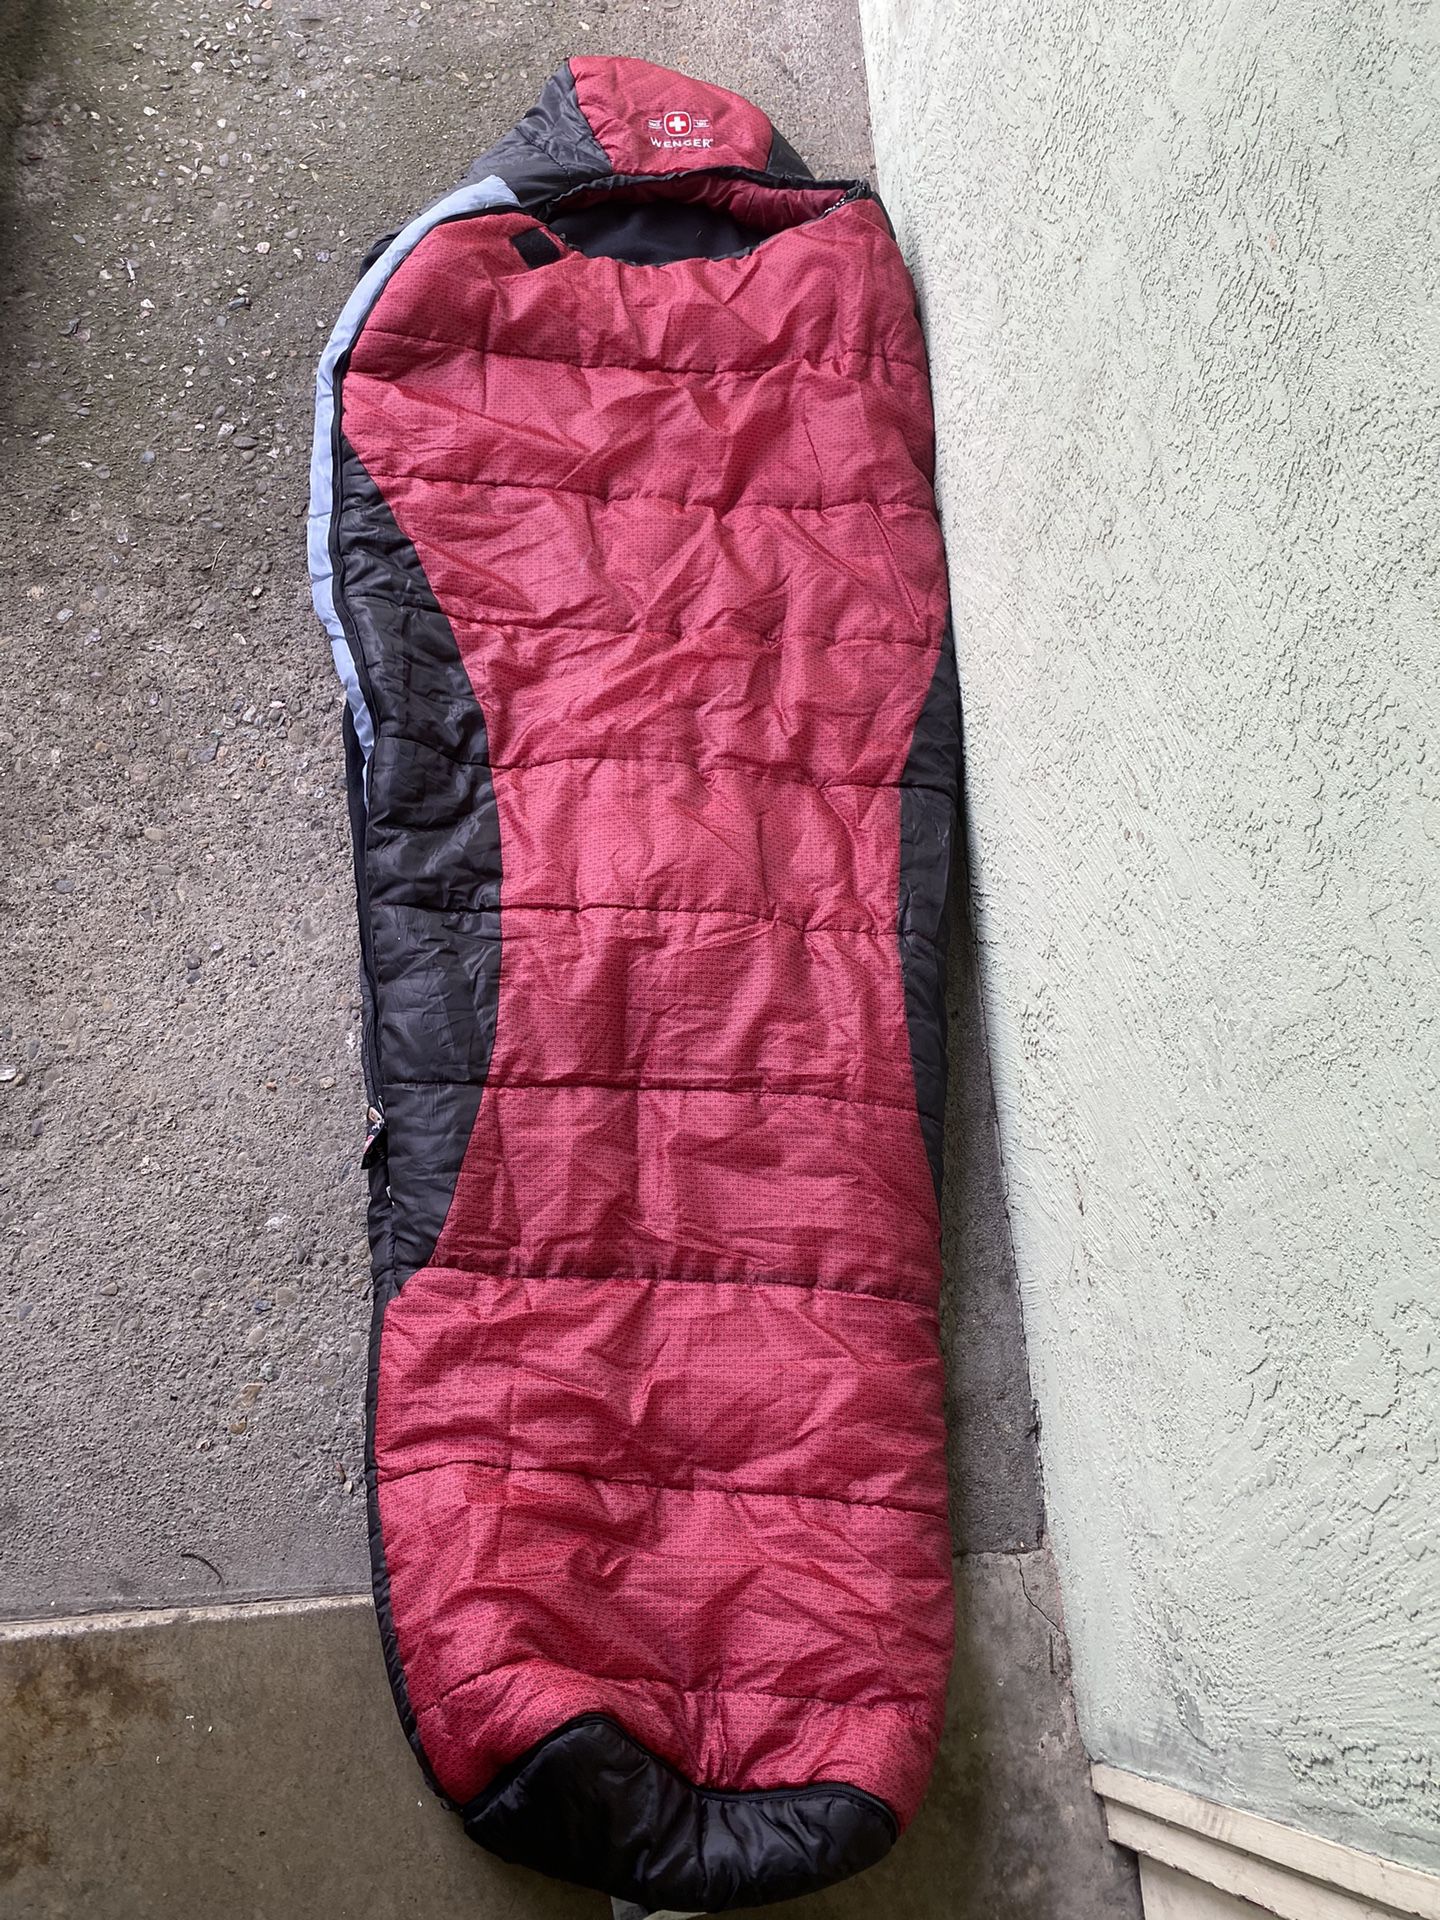 Sleeping bag Adult size 